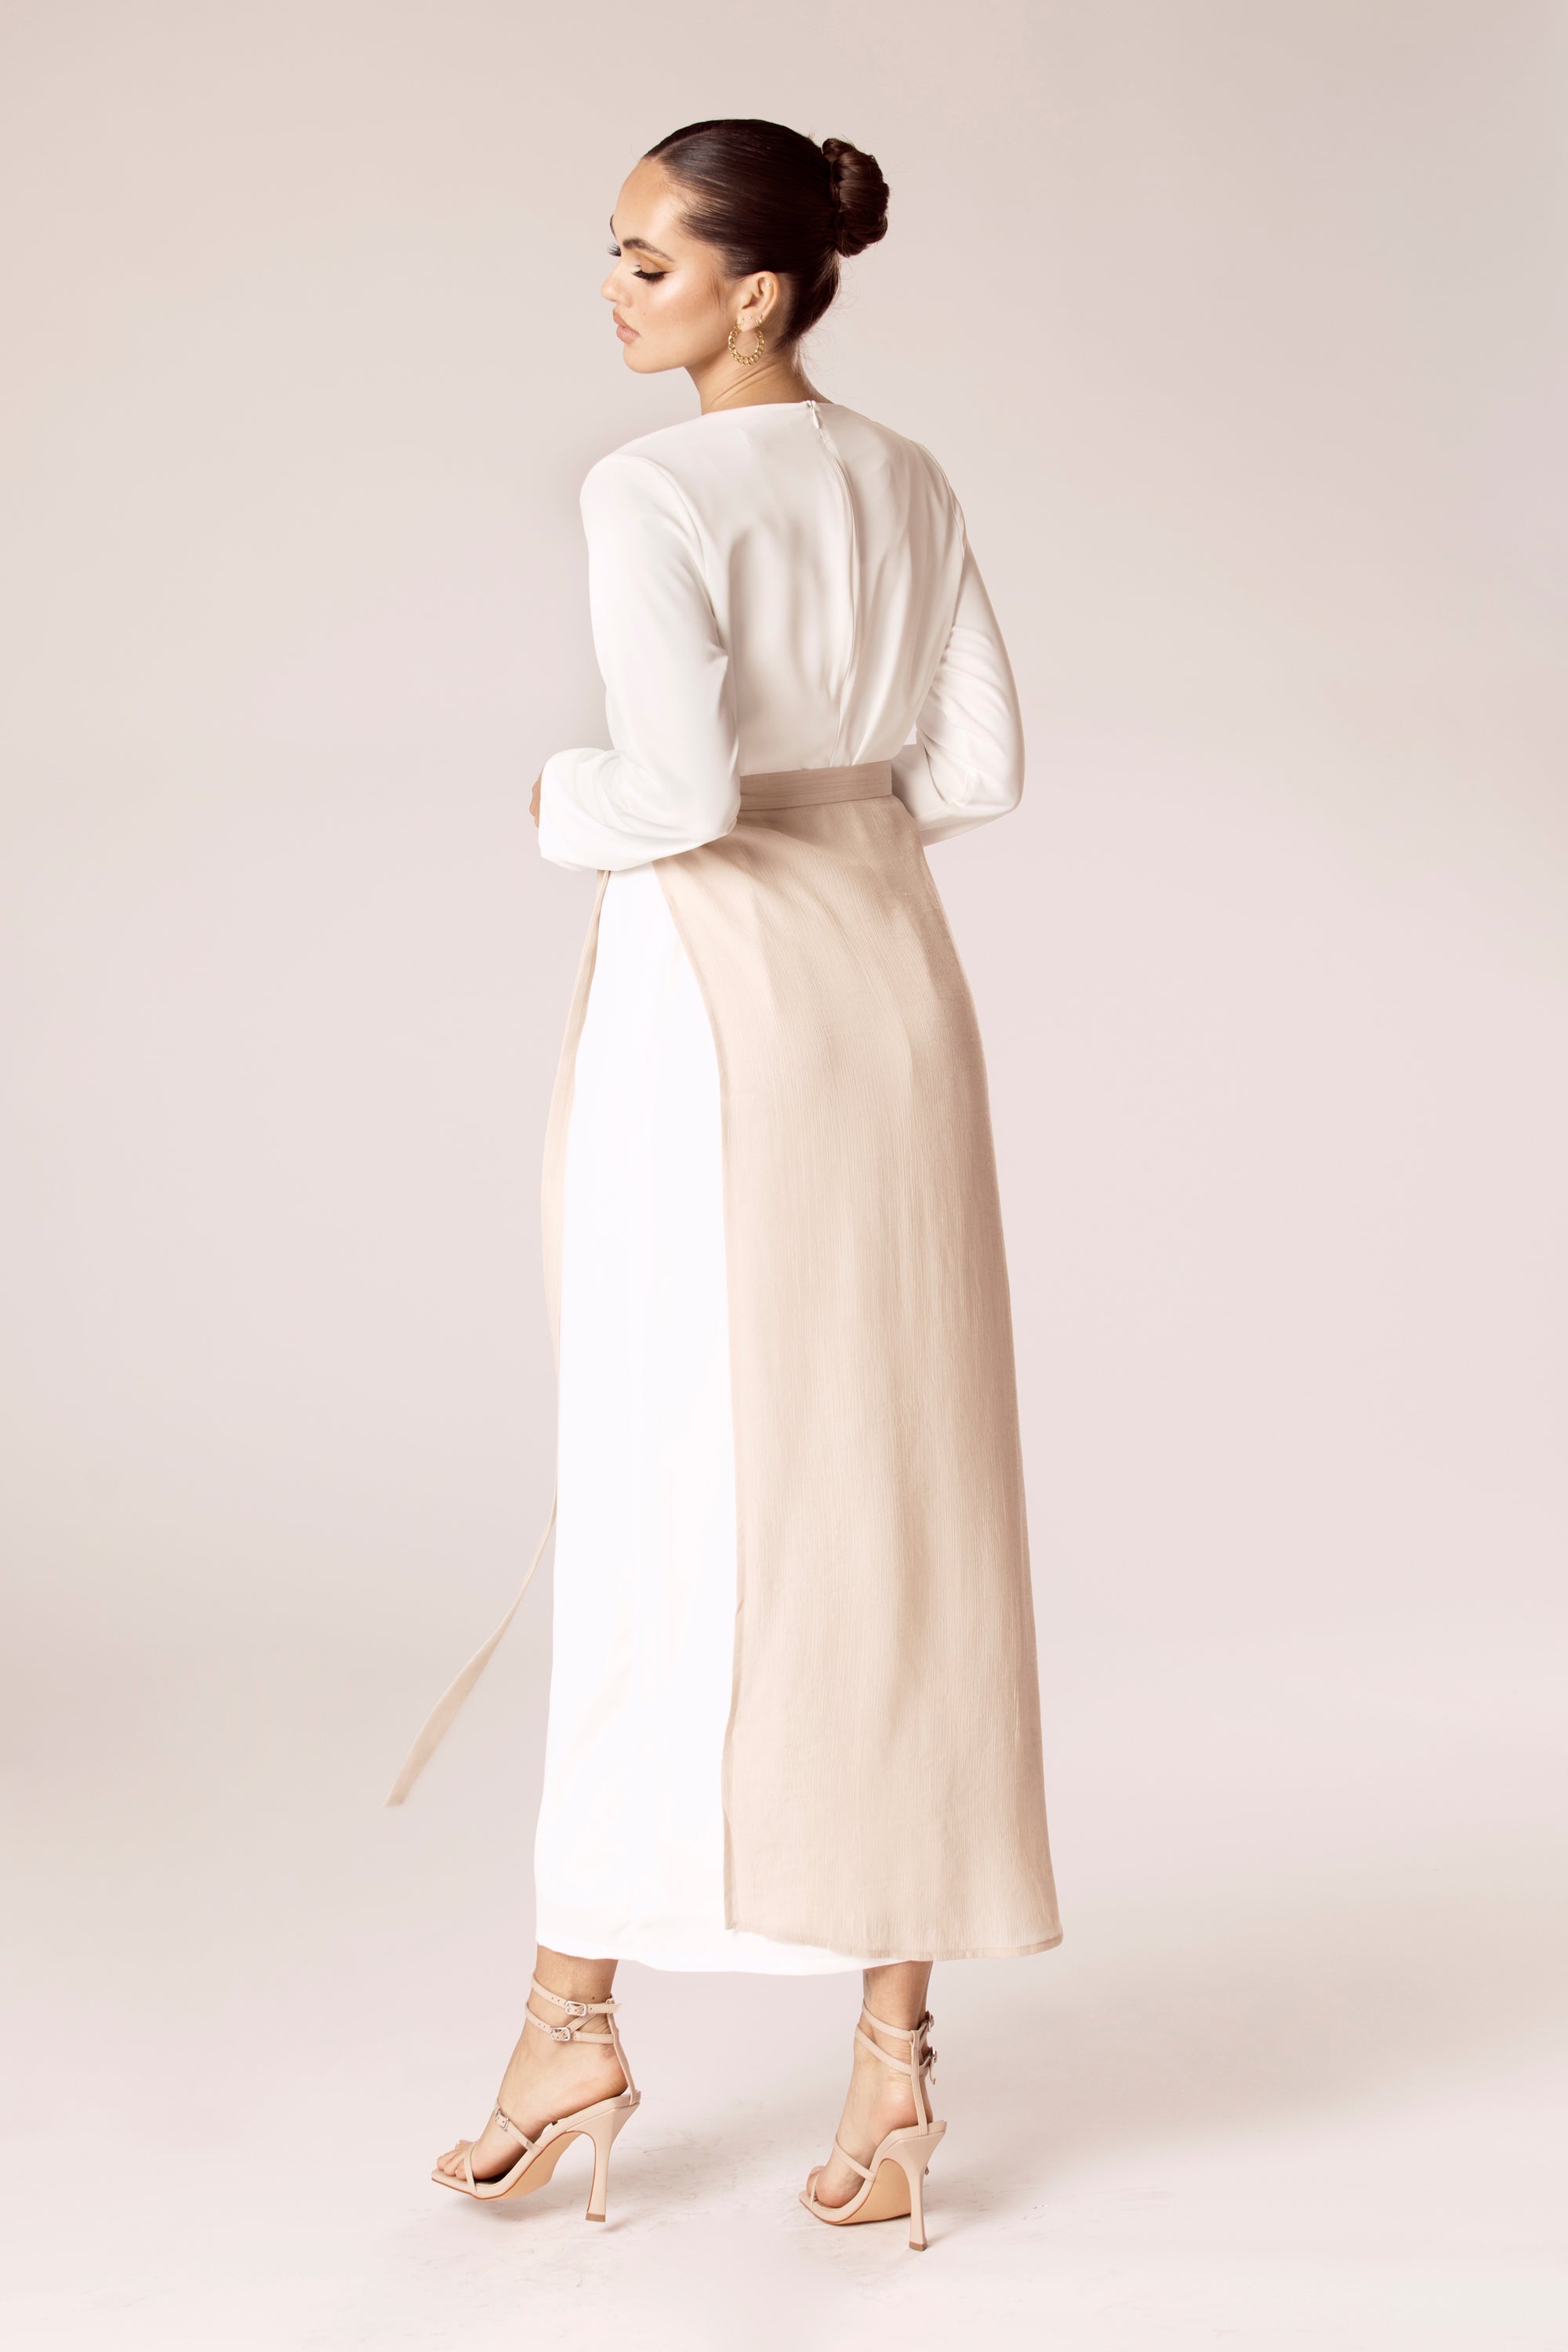 Rana Textured Overlay Tie Skirt - Sand Beige Veiled Collection 